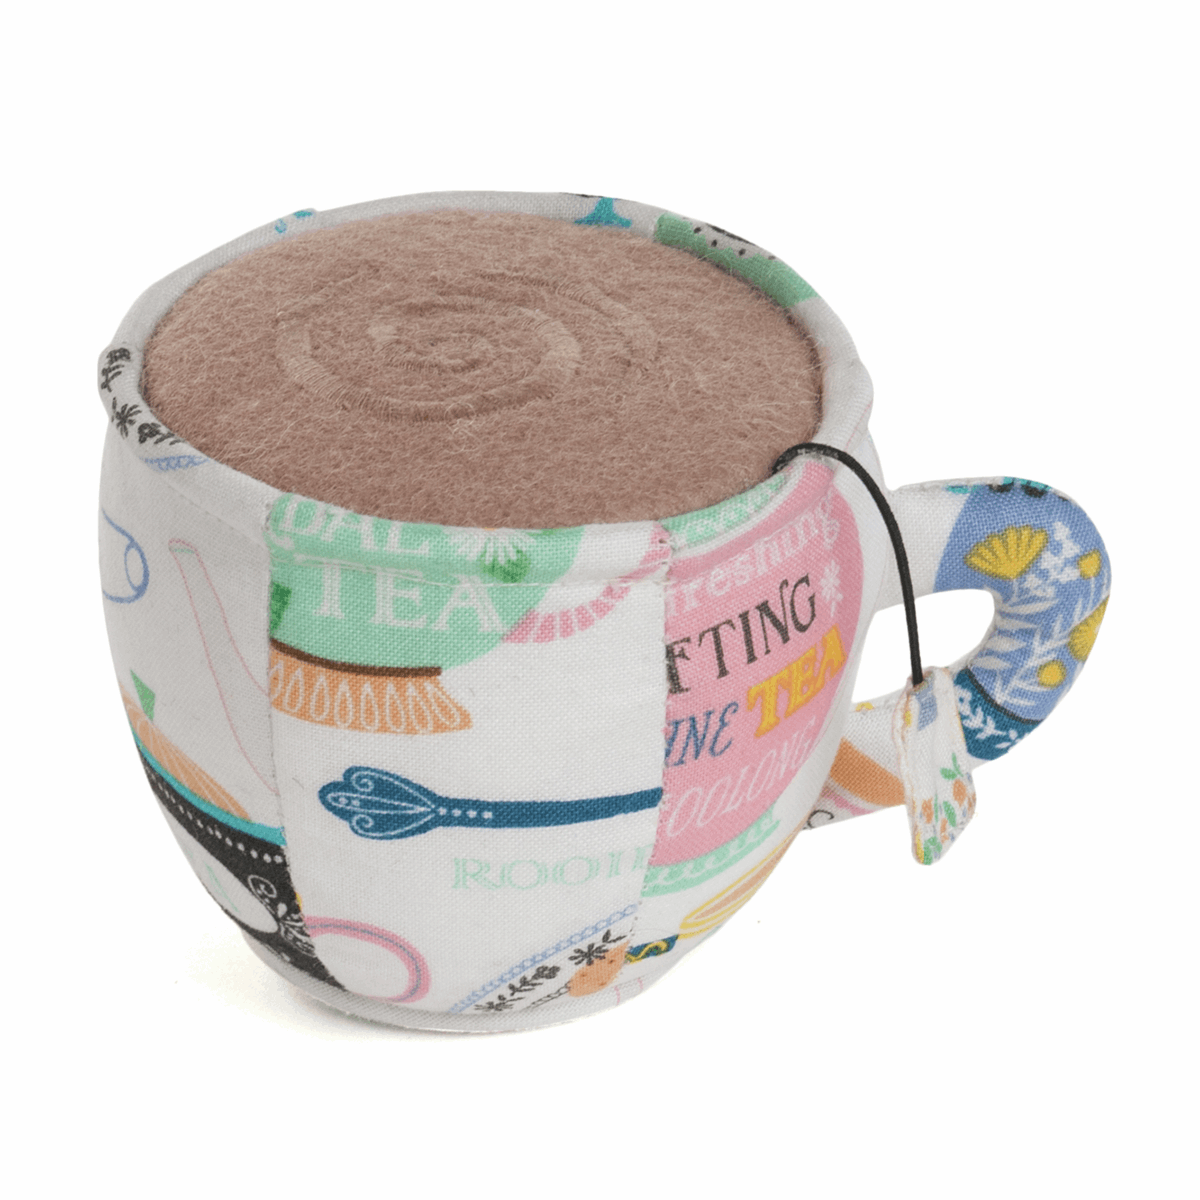 Pincushion - Time for Tea Teacup